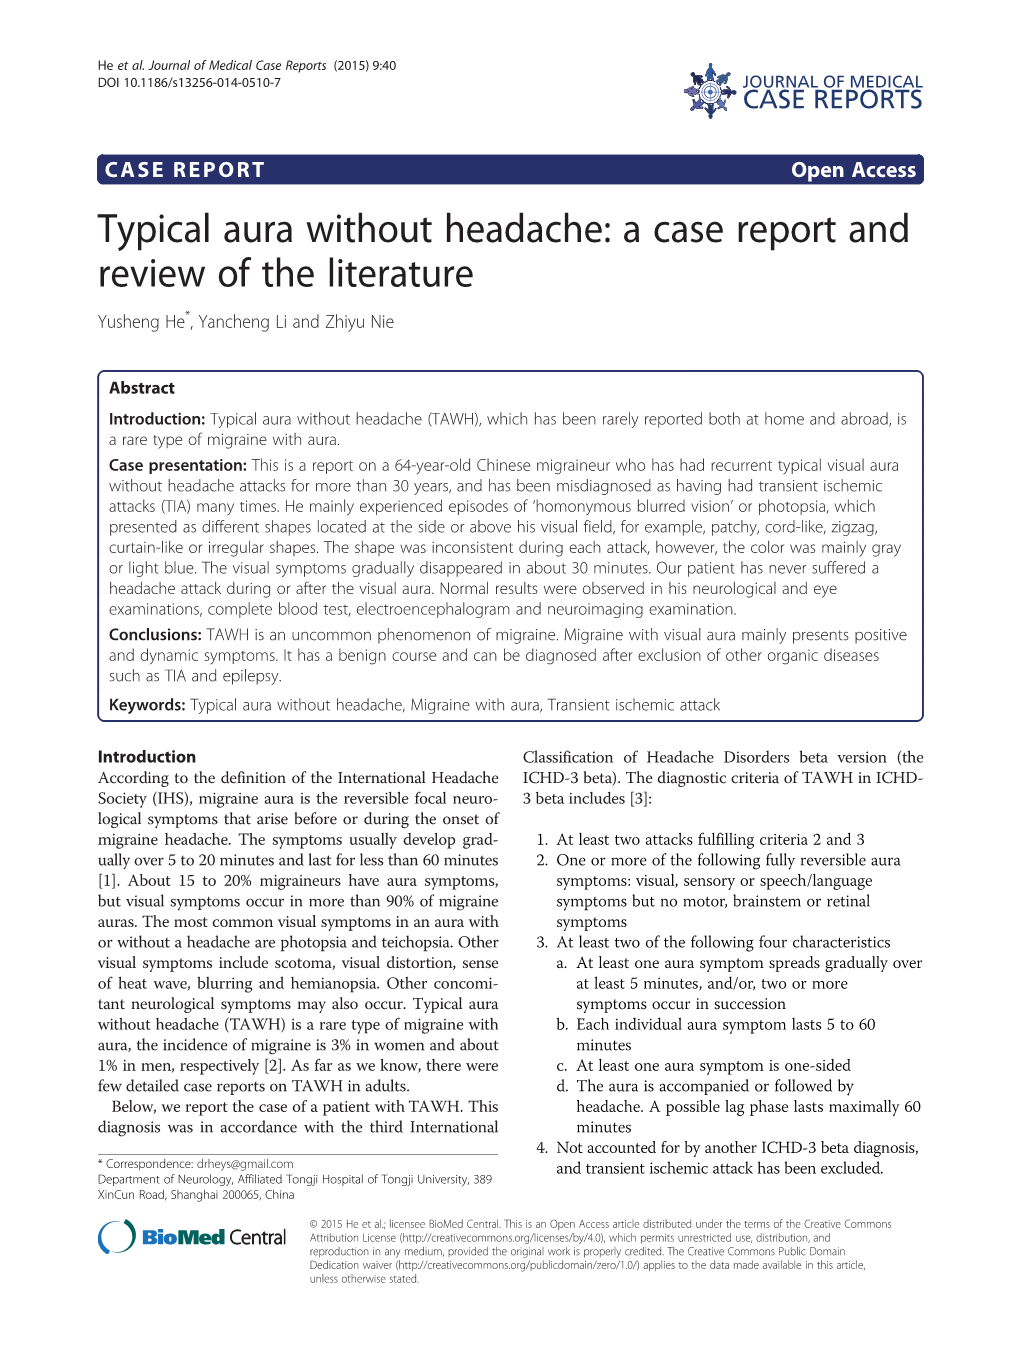 Typical Aura Without Headache: a Case Report and Review of the Literature Yusheng He*, Yancheng Li and Zhiyu Nie